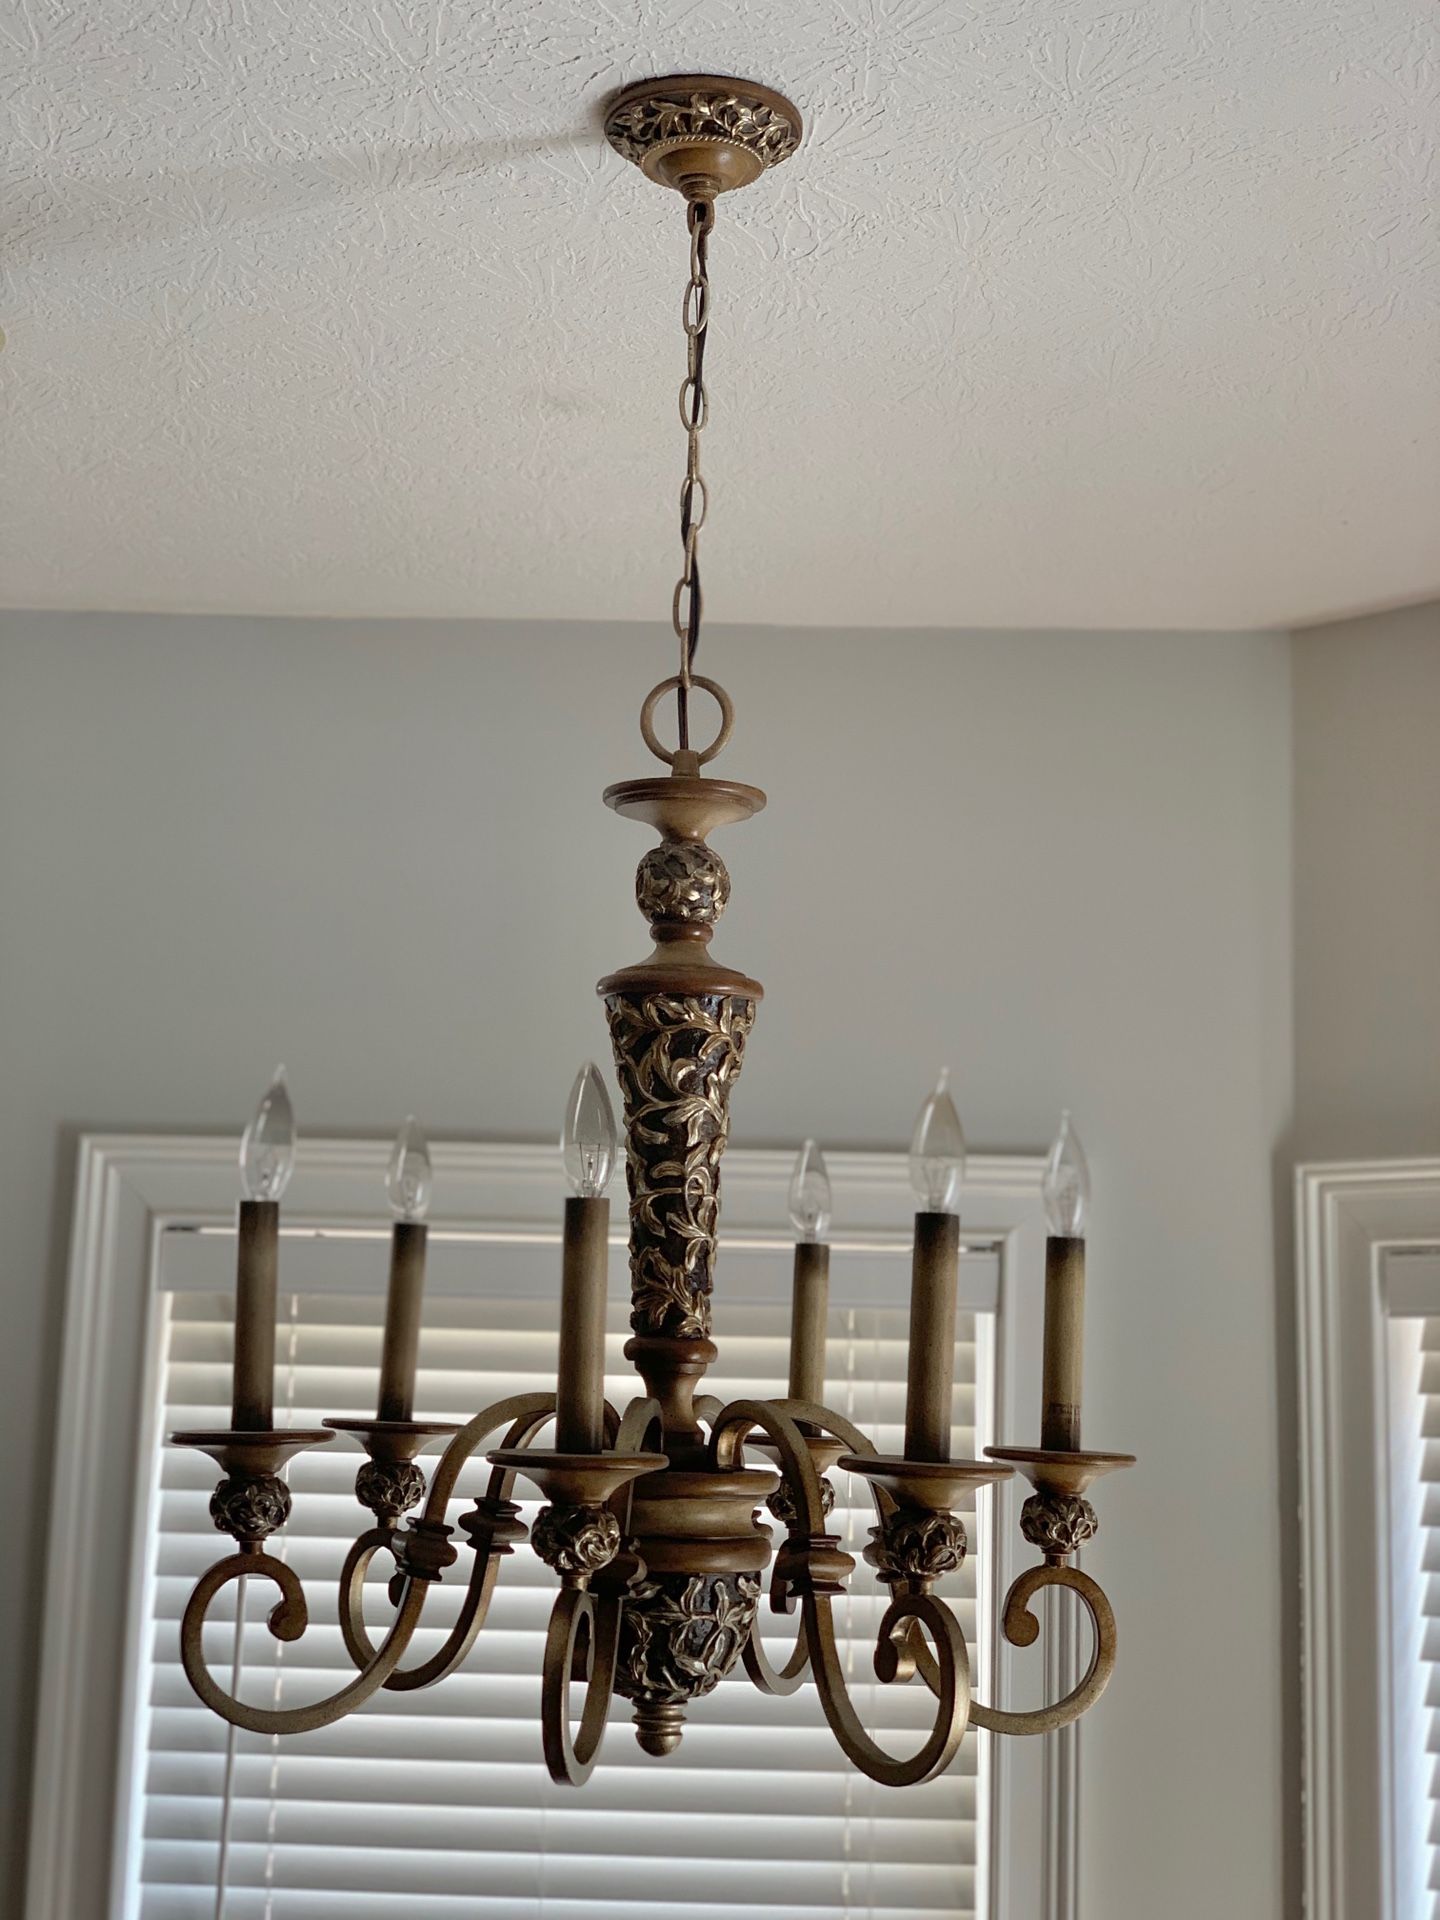 Chandelier pendant lighting and wall decor